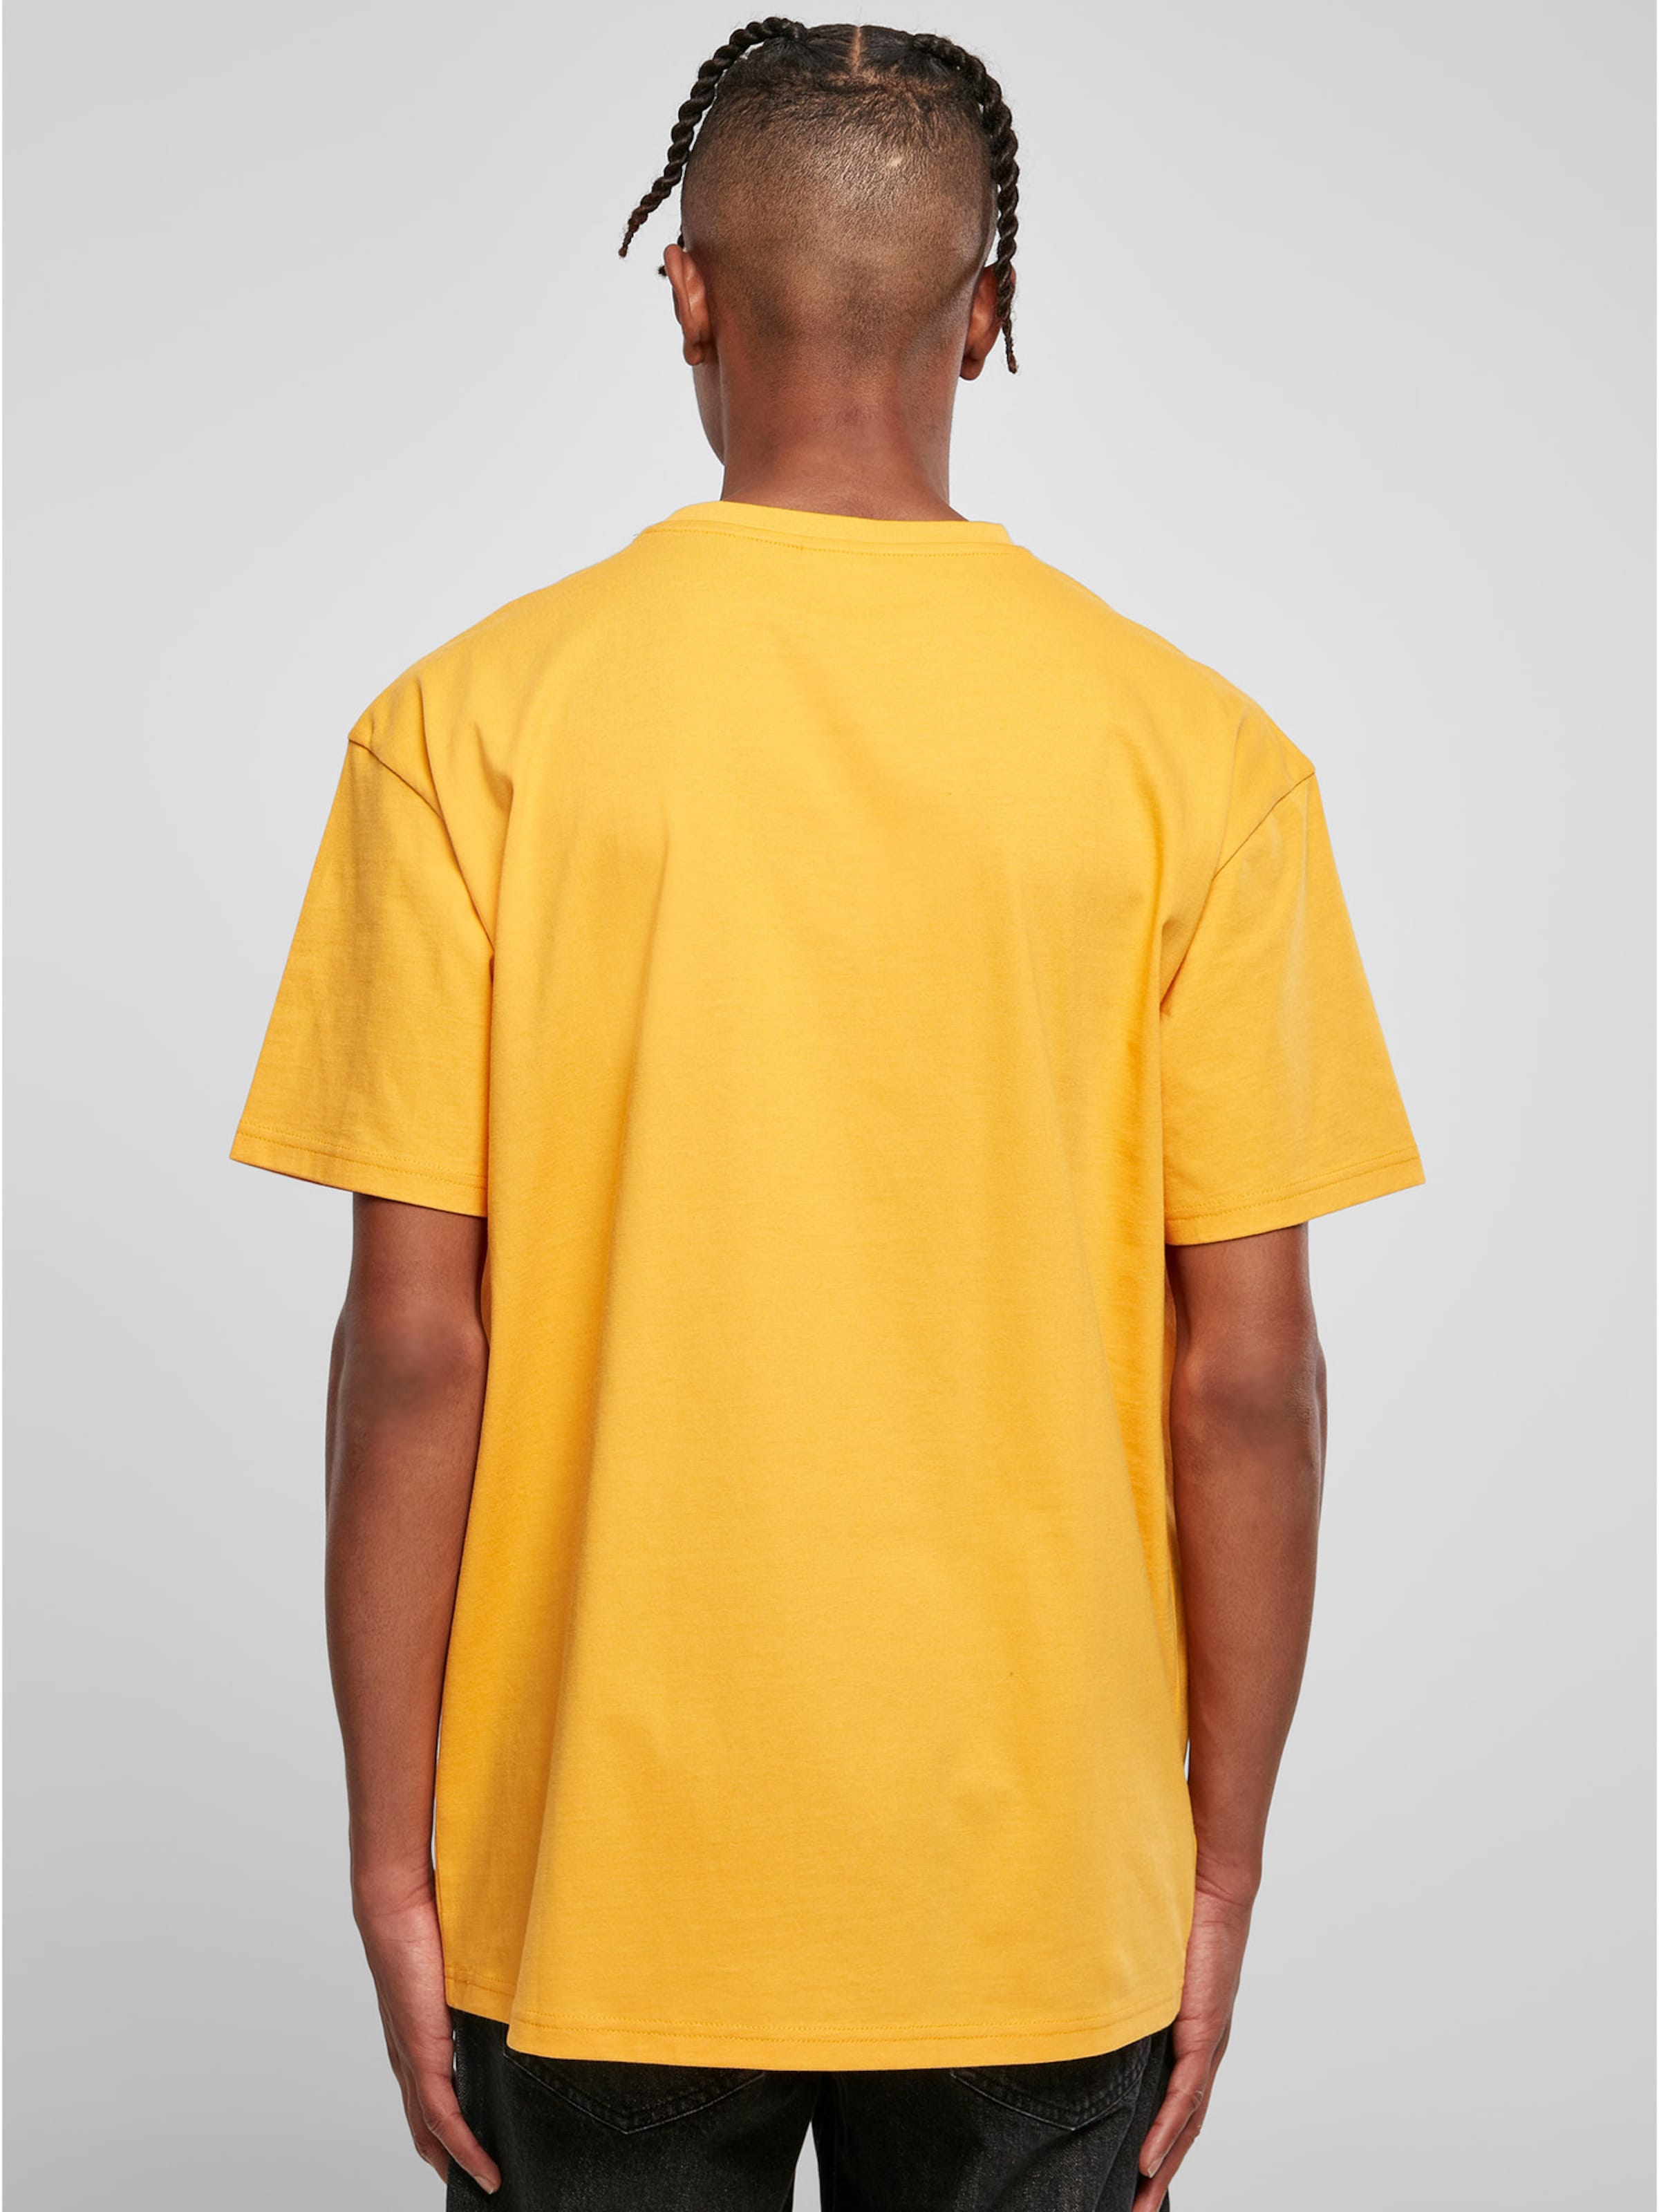 Urban Classics T-Shirt in Goldgelb 